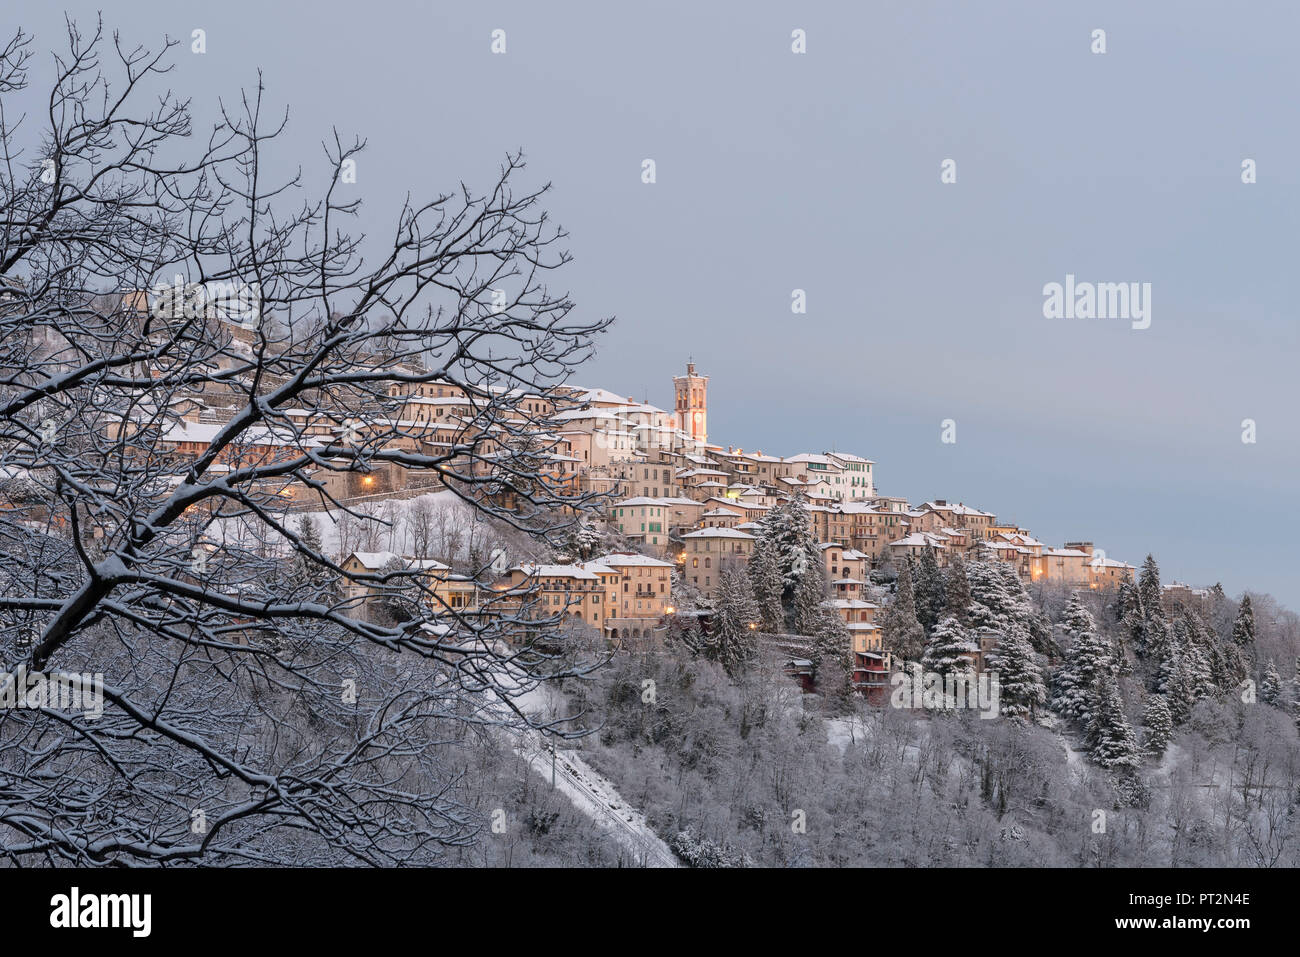 The village of Santa Maria del Monte in the evening after a snowy day from Campo dei Fiori, Parco Campo dei Fiori, Varese, Lombardy, Italy, Europe Stock Photo